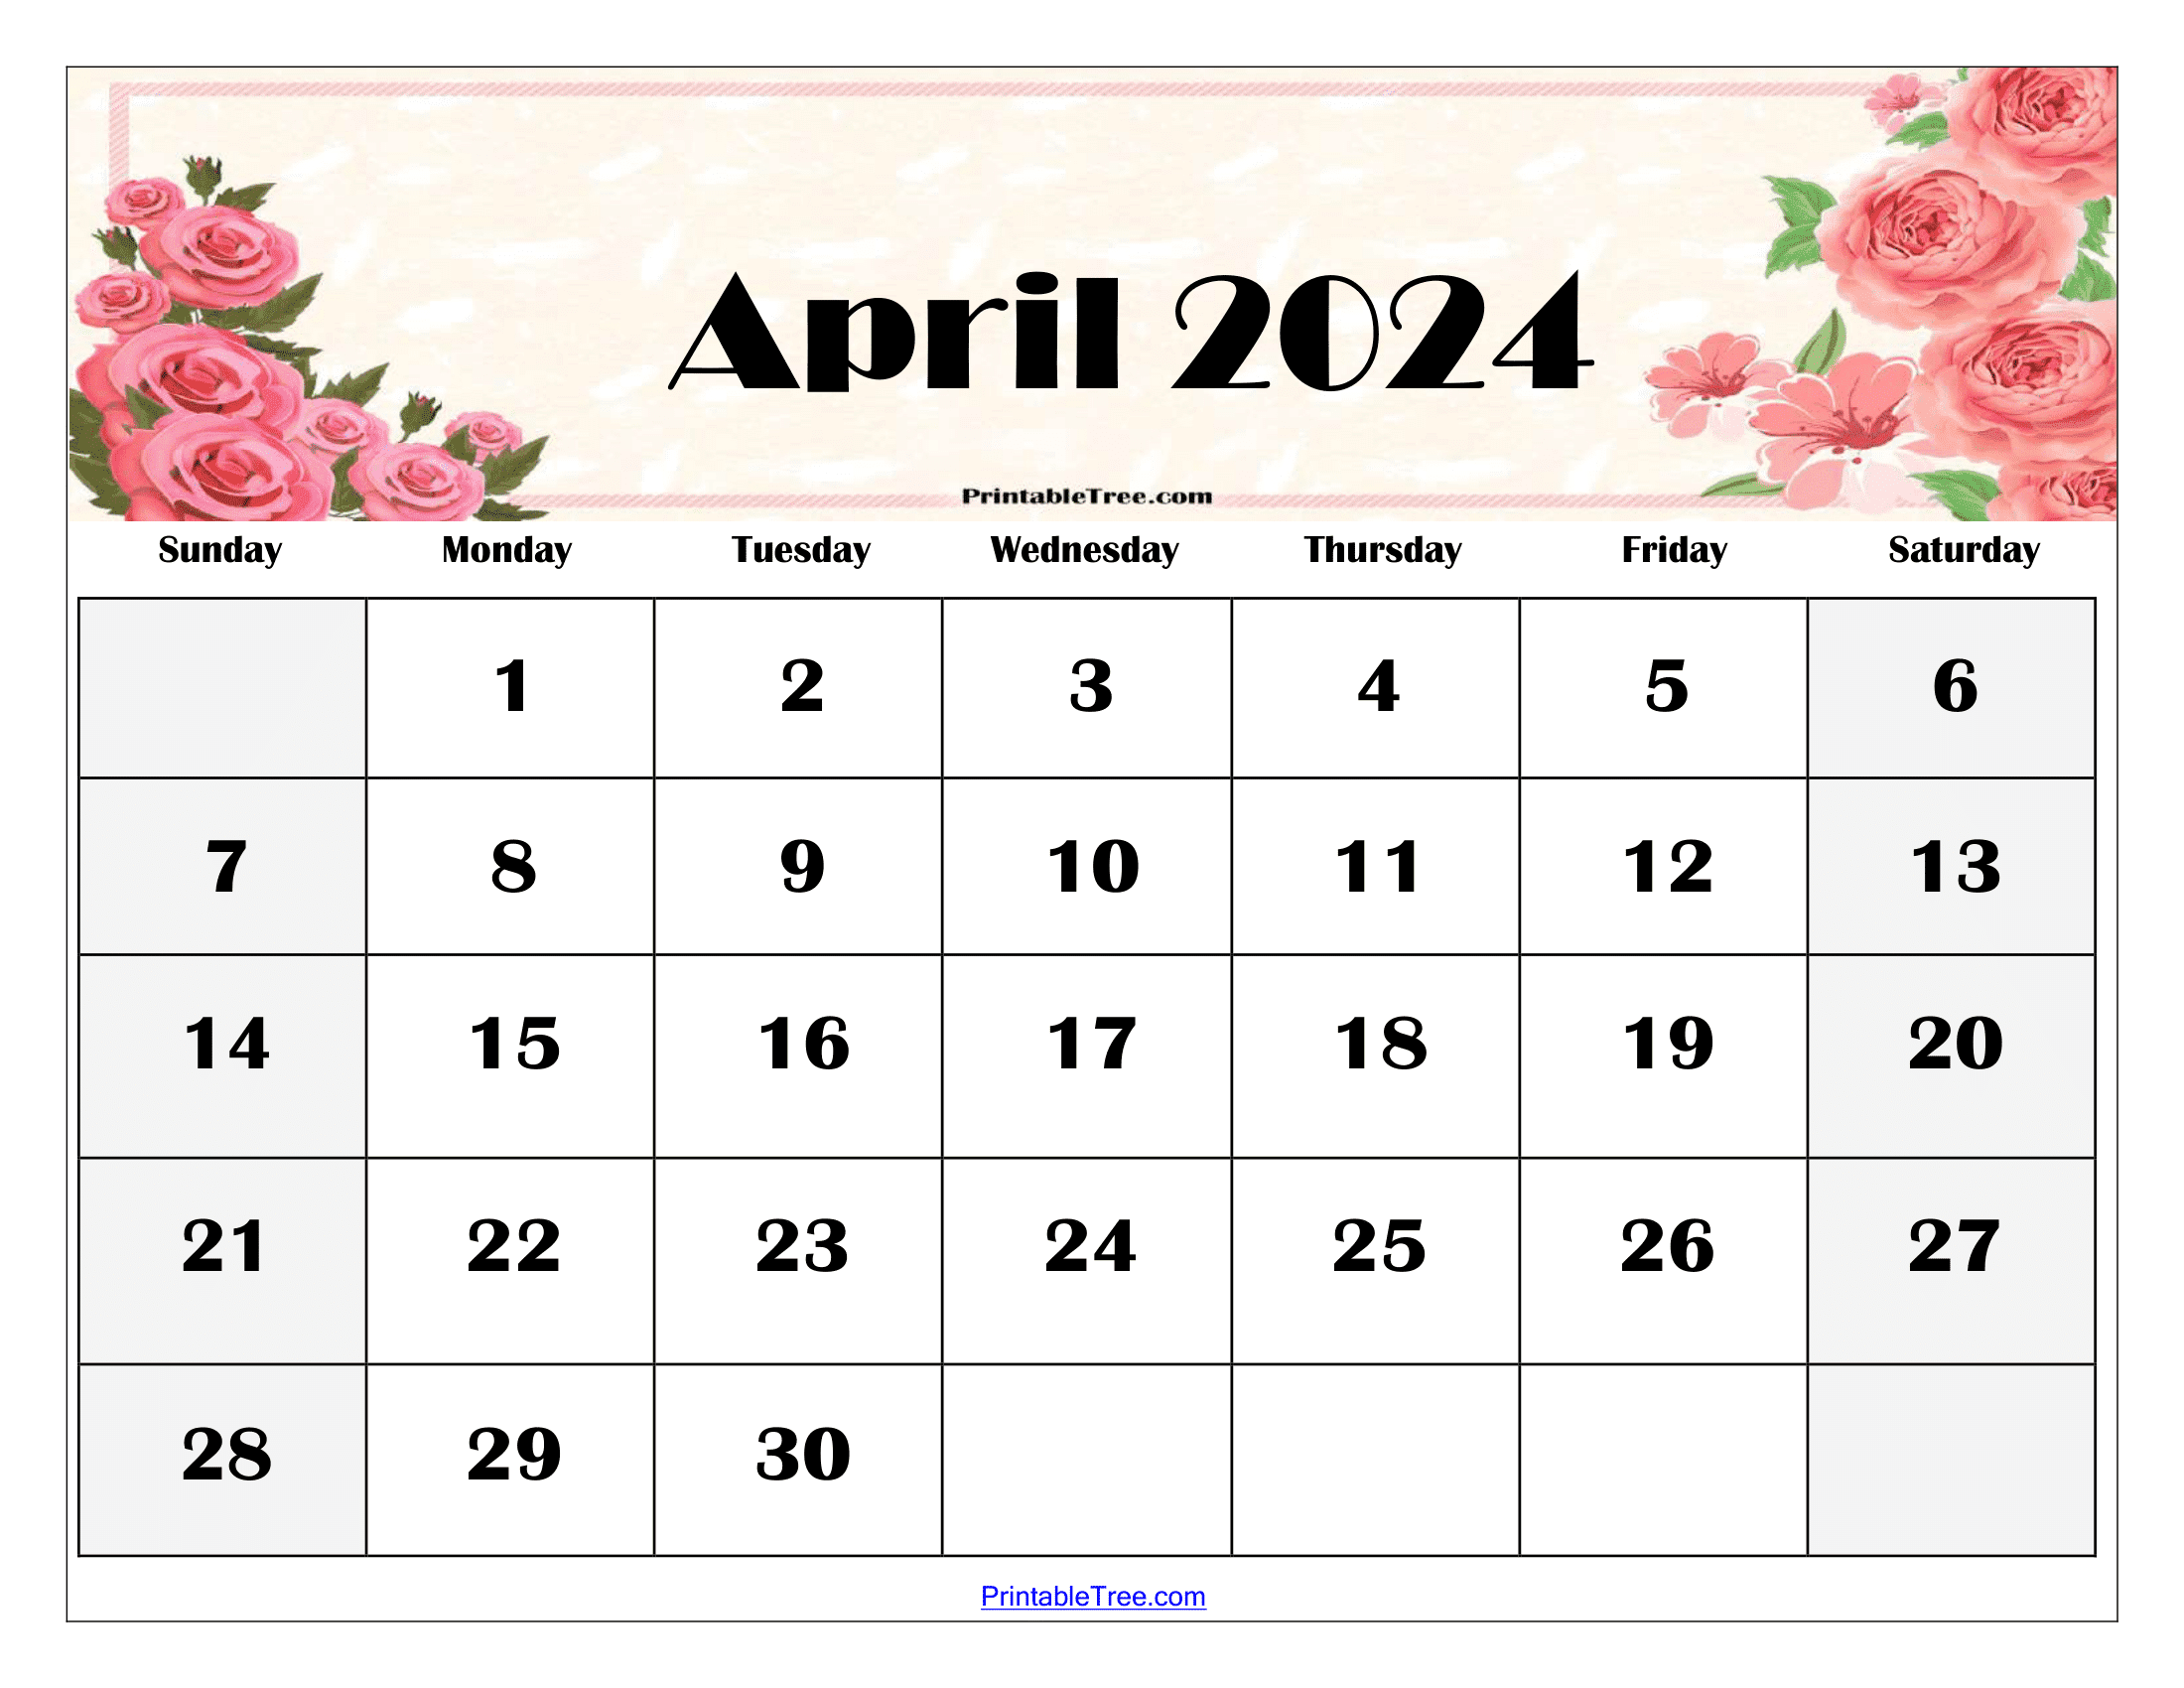 Printable April 2024 Calendar Planner Britt Colleen - Free Printable 2024 April Calendar With Holidays